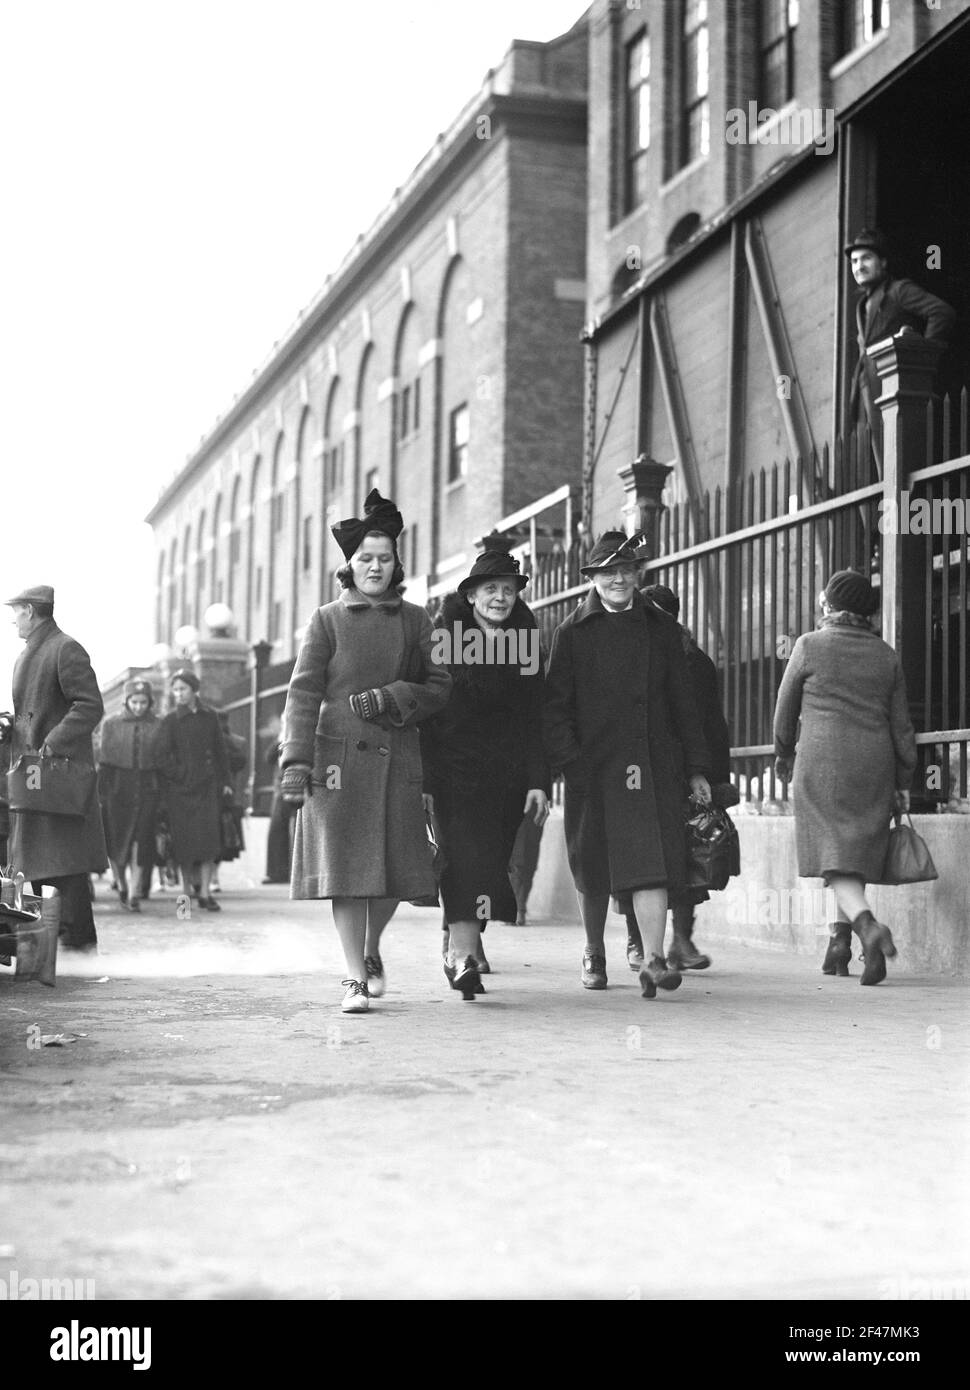 Employés quittant Ayer Mills, Lawrence, Massachusetts, États-Unis, Jack Delano, U.S. Office of War information, janvier 1941 Banque D'Images